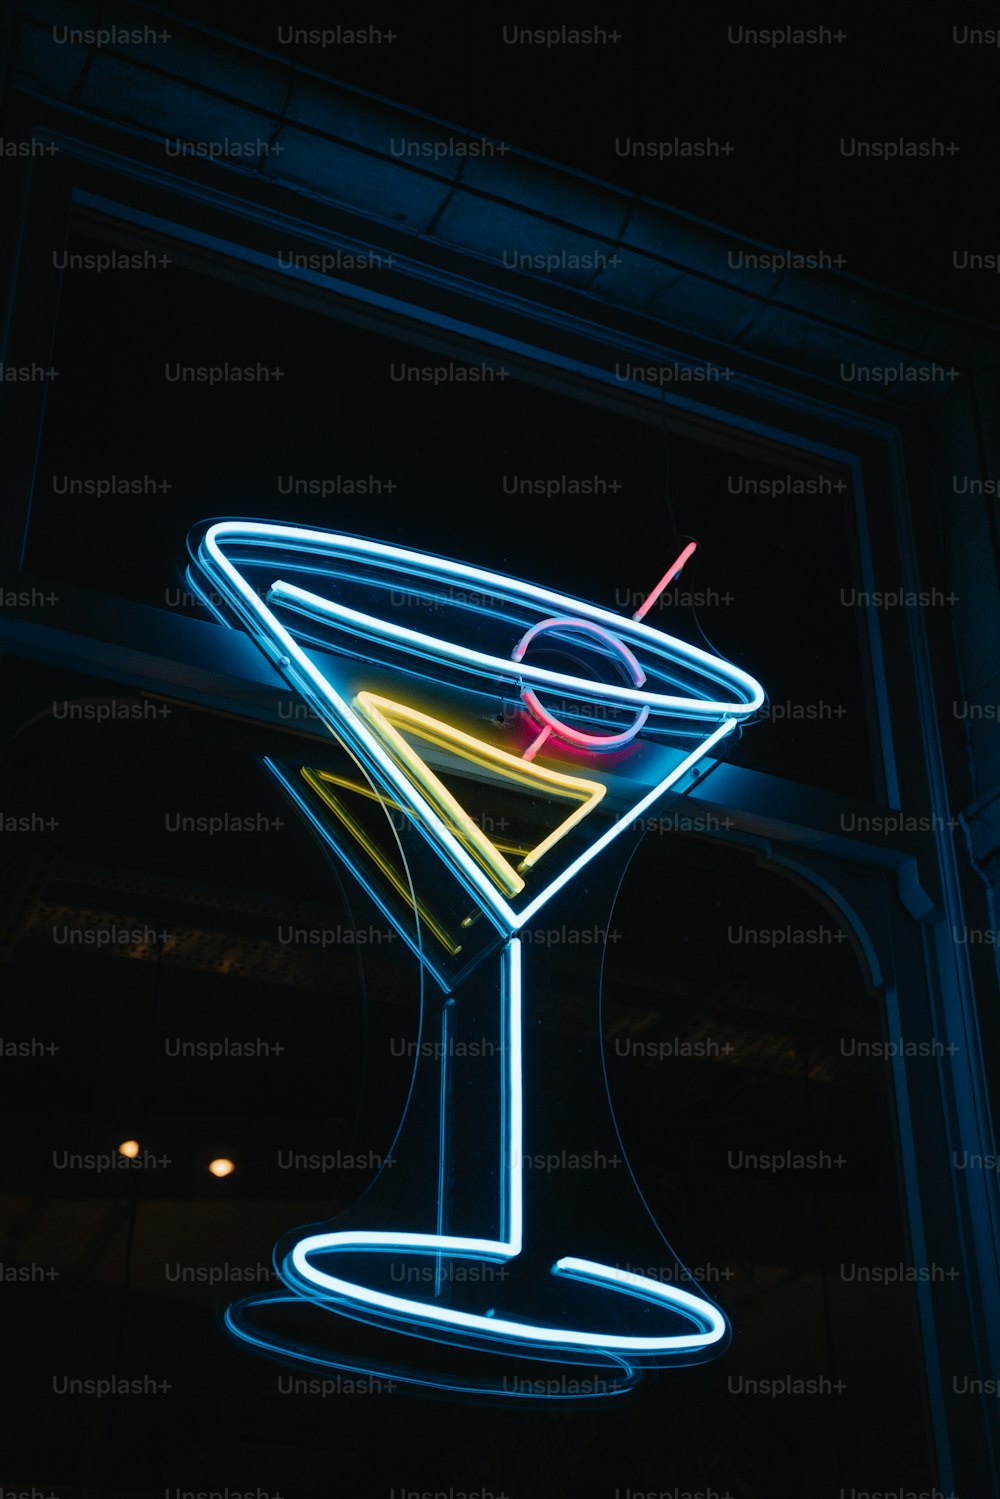 Un vaso de martini iluminado con una pajita